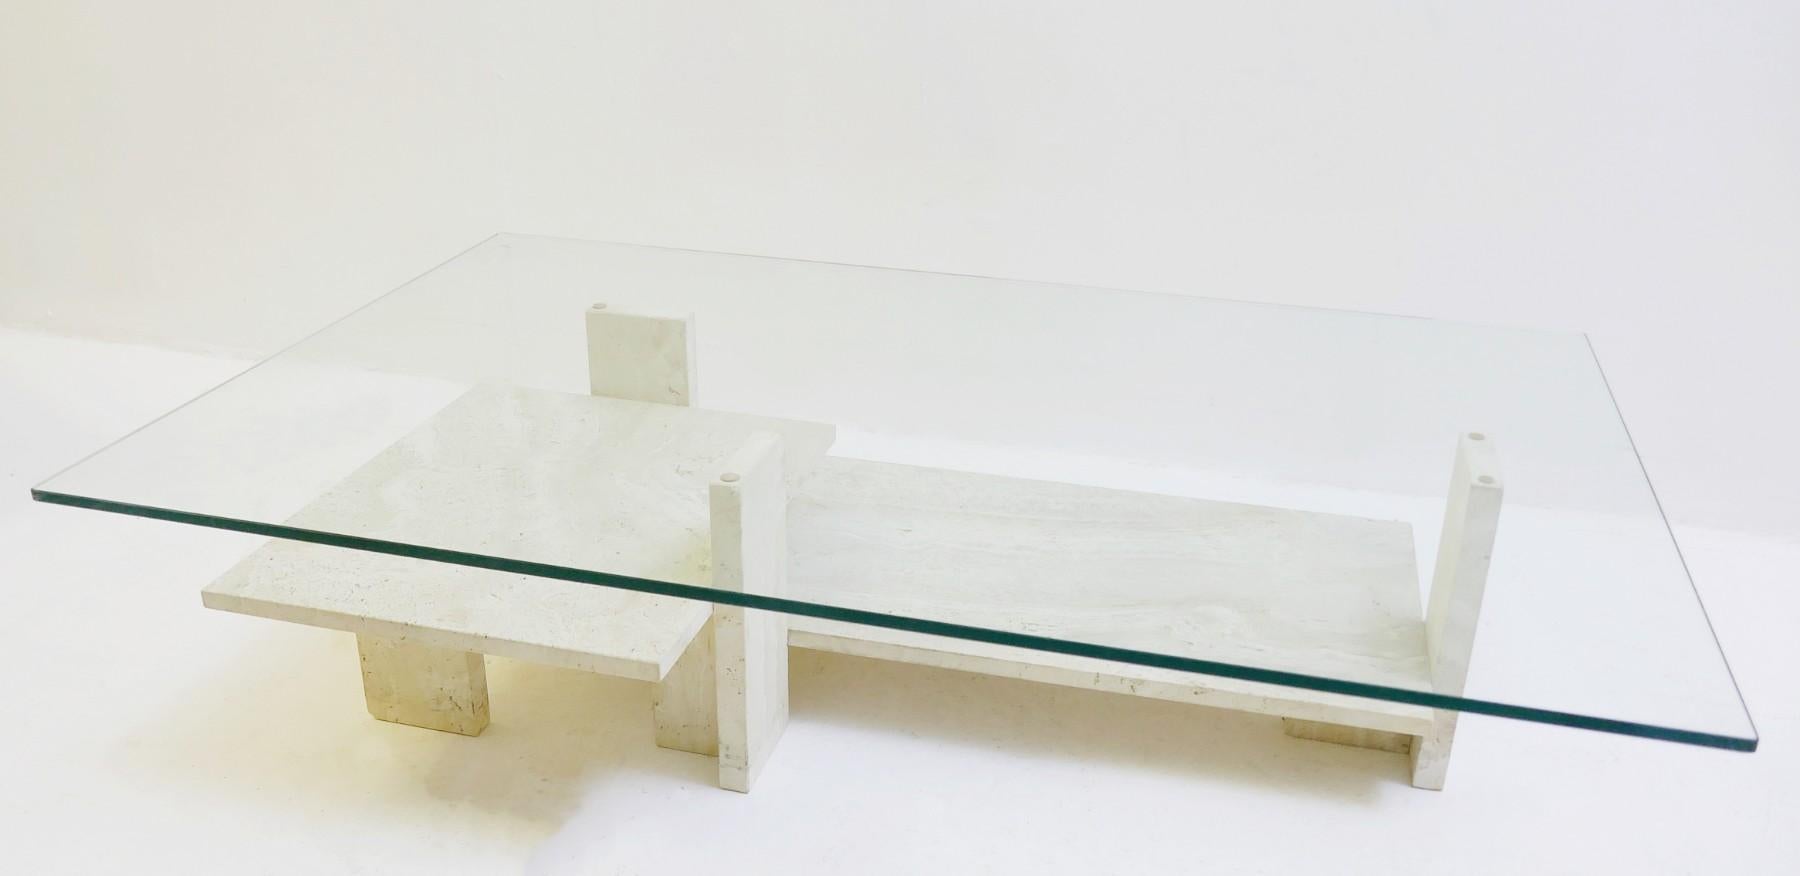 Sculptural travertine coffee table by Willy Ballez, 1980s, Belgium.